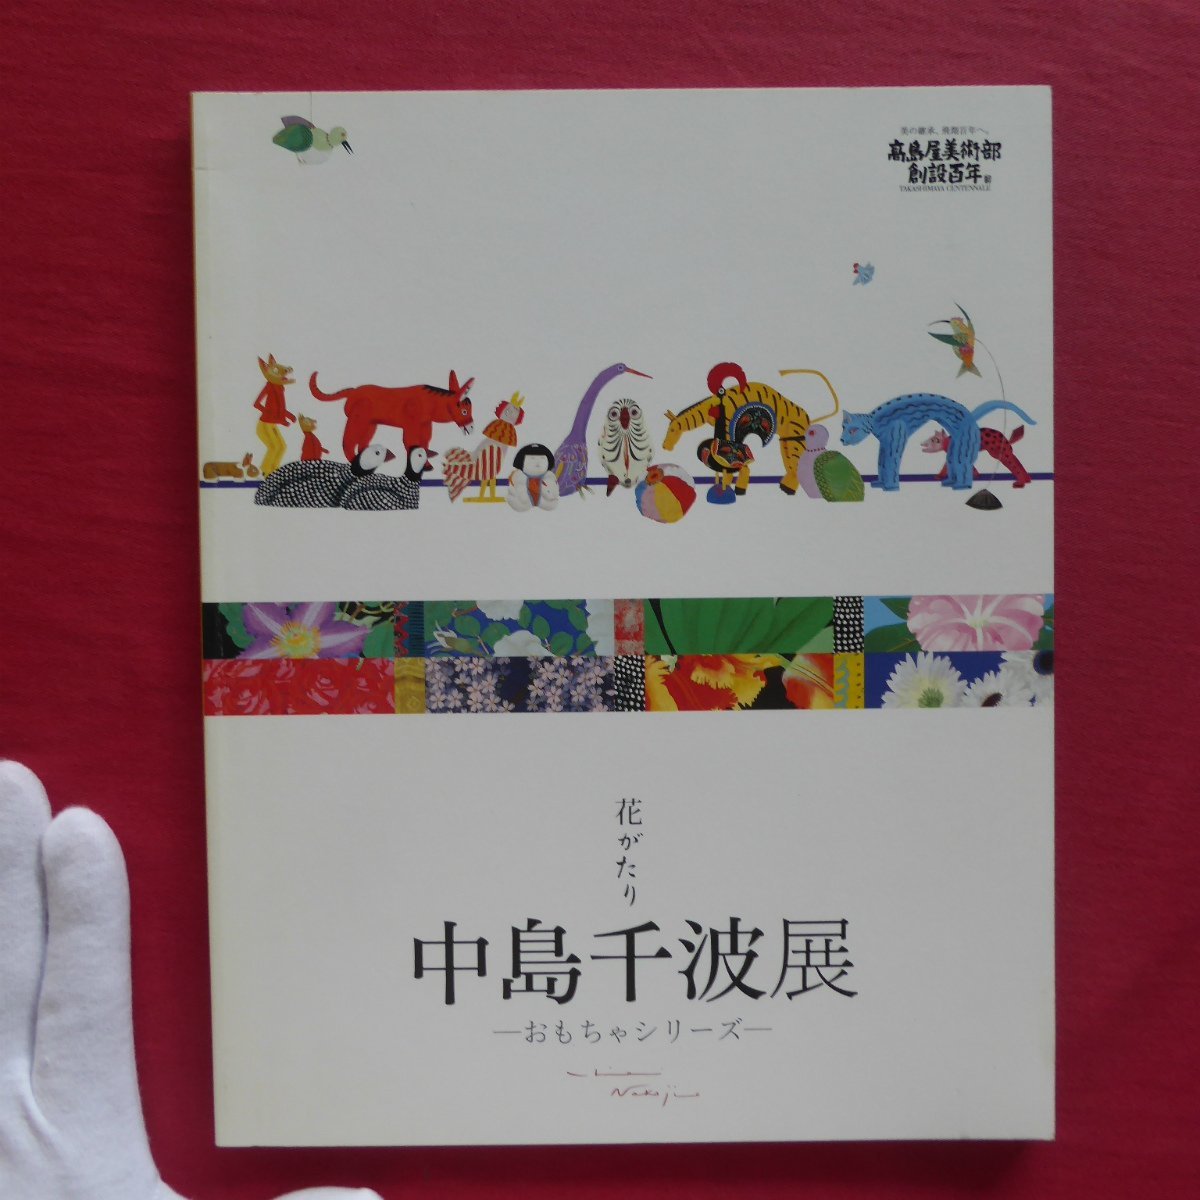 Catalogue p2 [Flower Story : Exposition Chinami Nakajima - Série de jouets - / 2008, Takashimaya], Peinture, Livre d'art, Collection, Catalogue